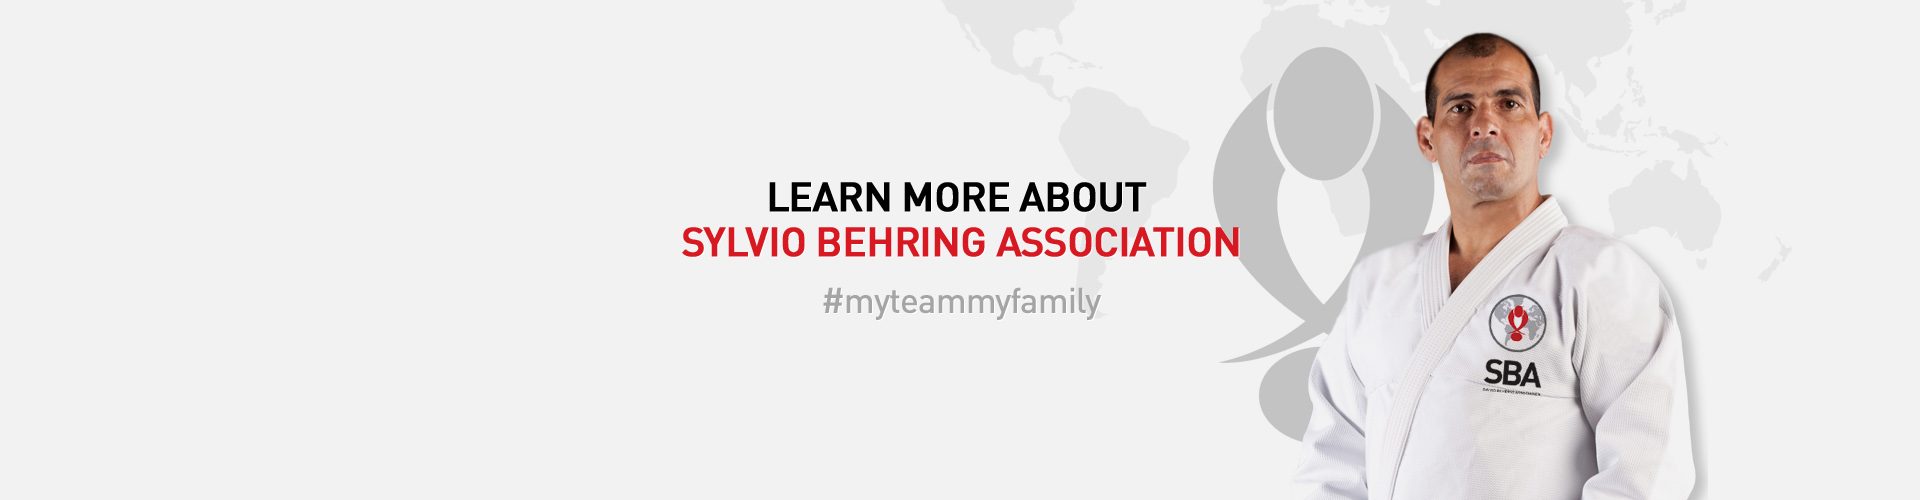 Header-About-Sylvio-Behring-Association